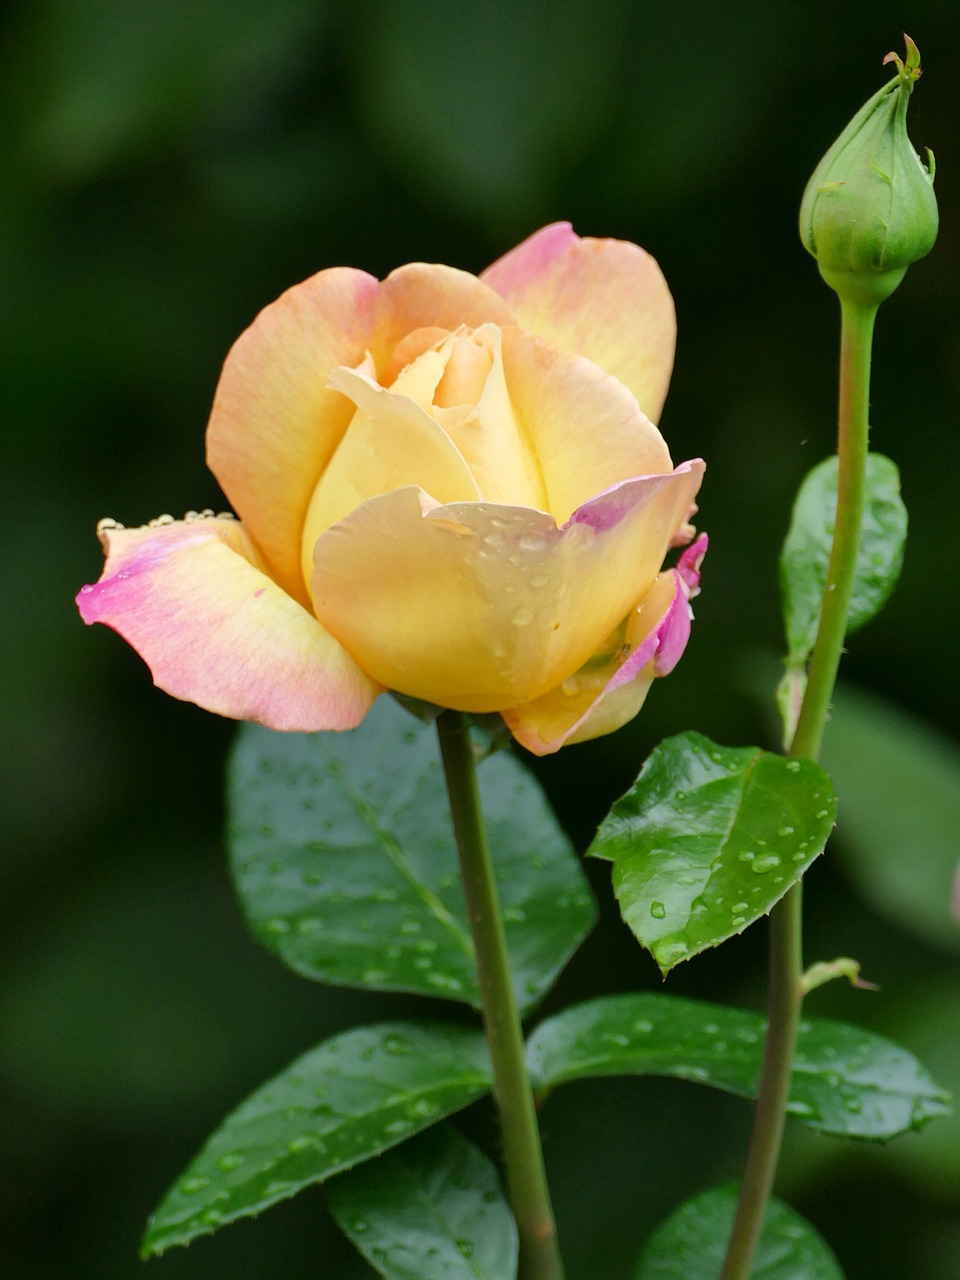 flower rose yellow free photo